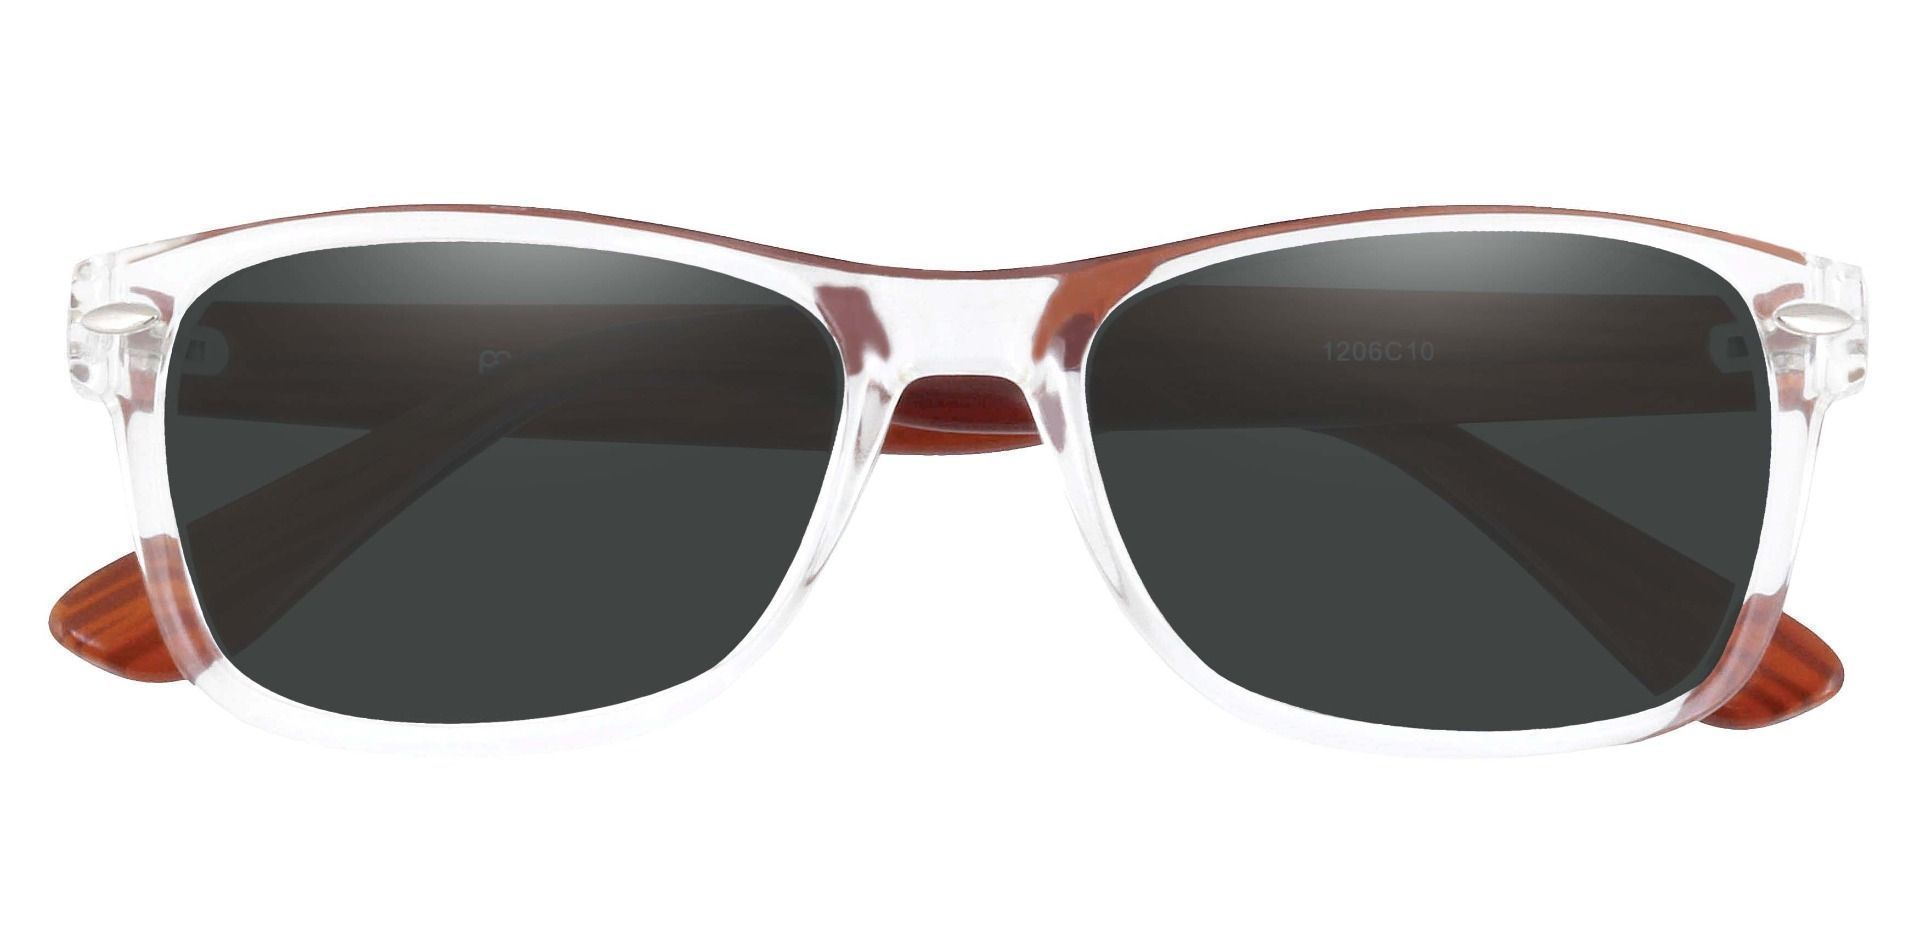 Kent Rectangle Prescription Sunglasses - Clear Frame With Gray Lenses